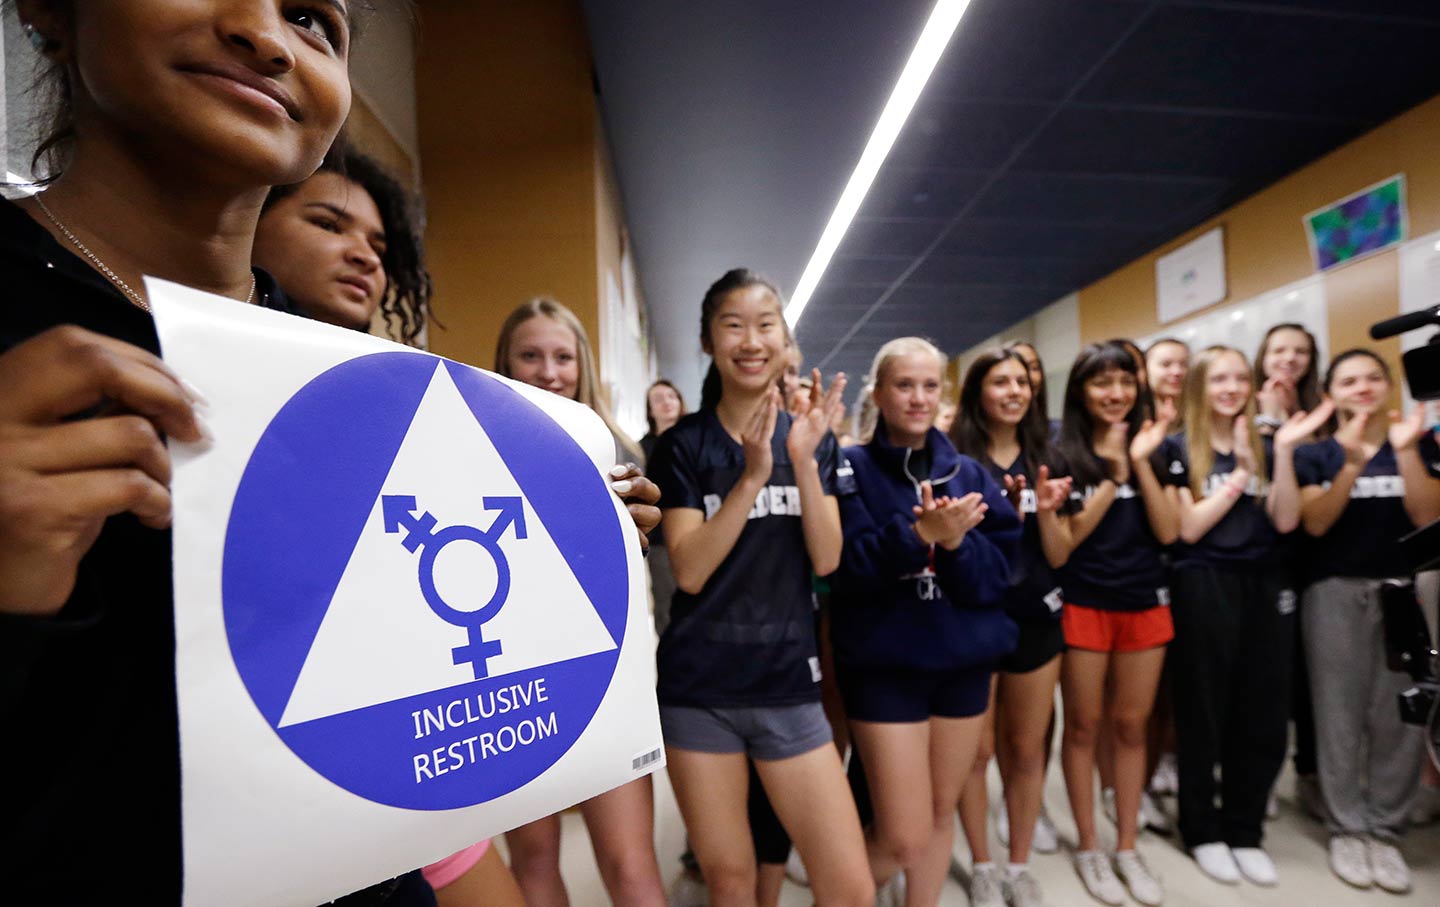 Students celebrate a gender-neutral bathroom